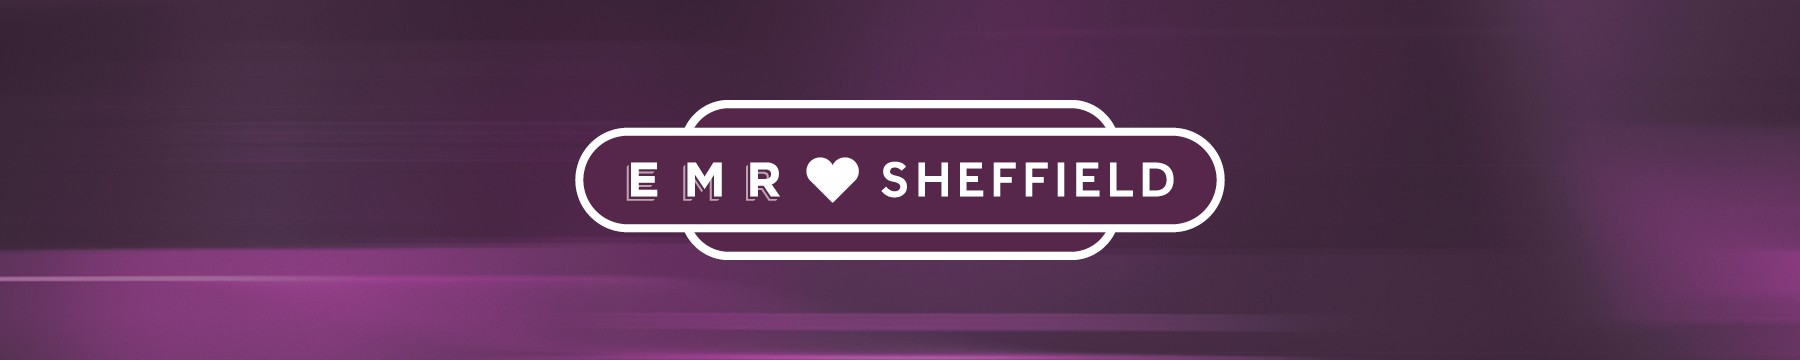 EMR loves Sheffield